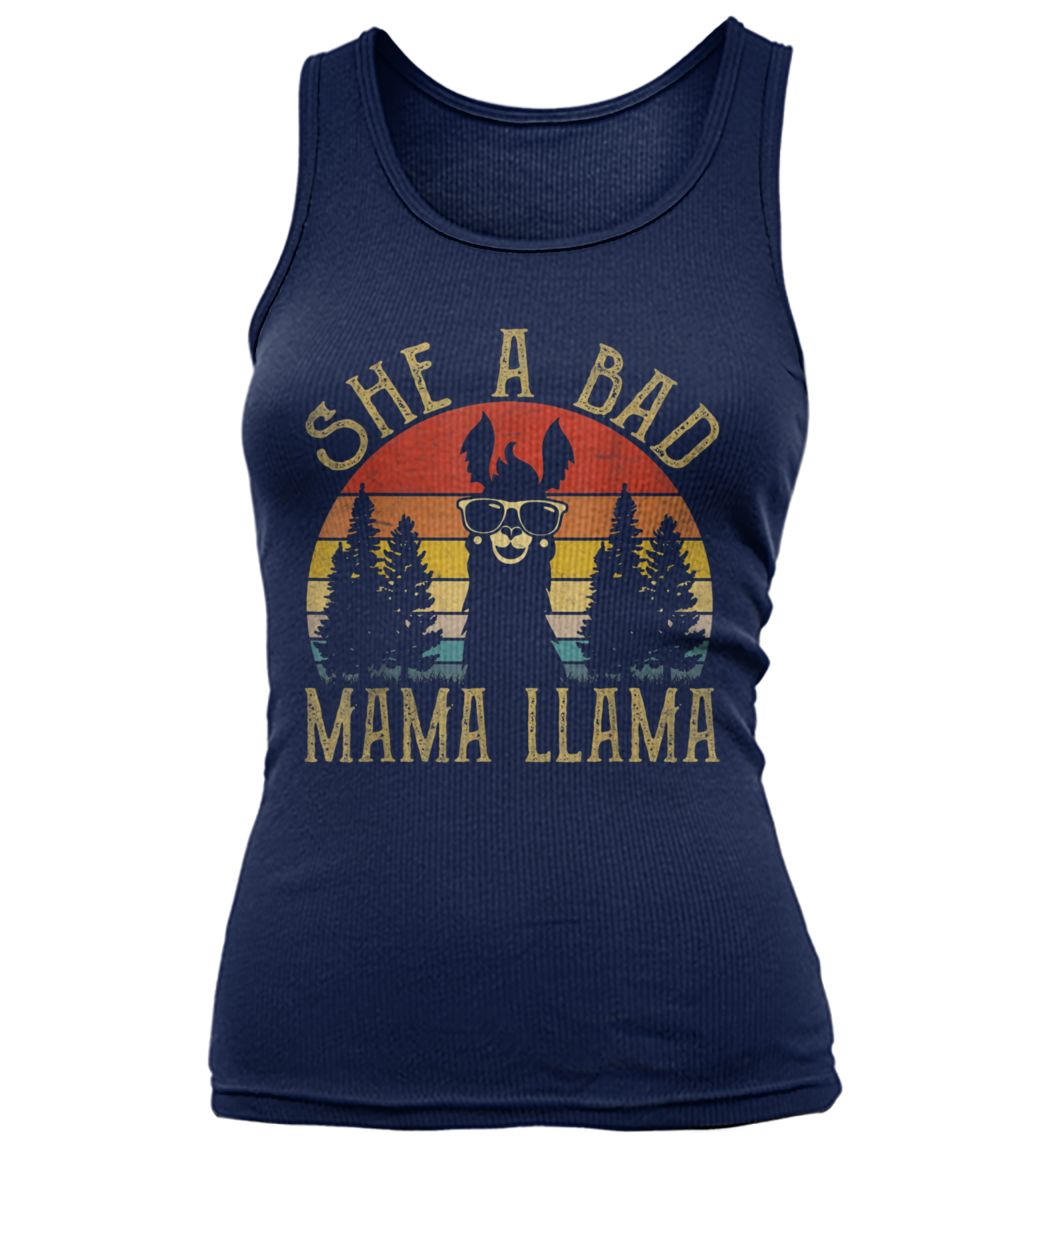 Vintage she's a bad mama llama women's tank top